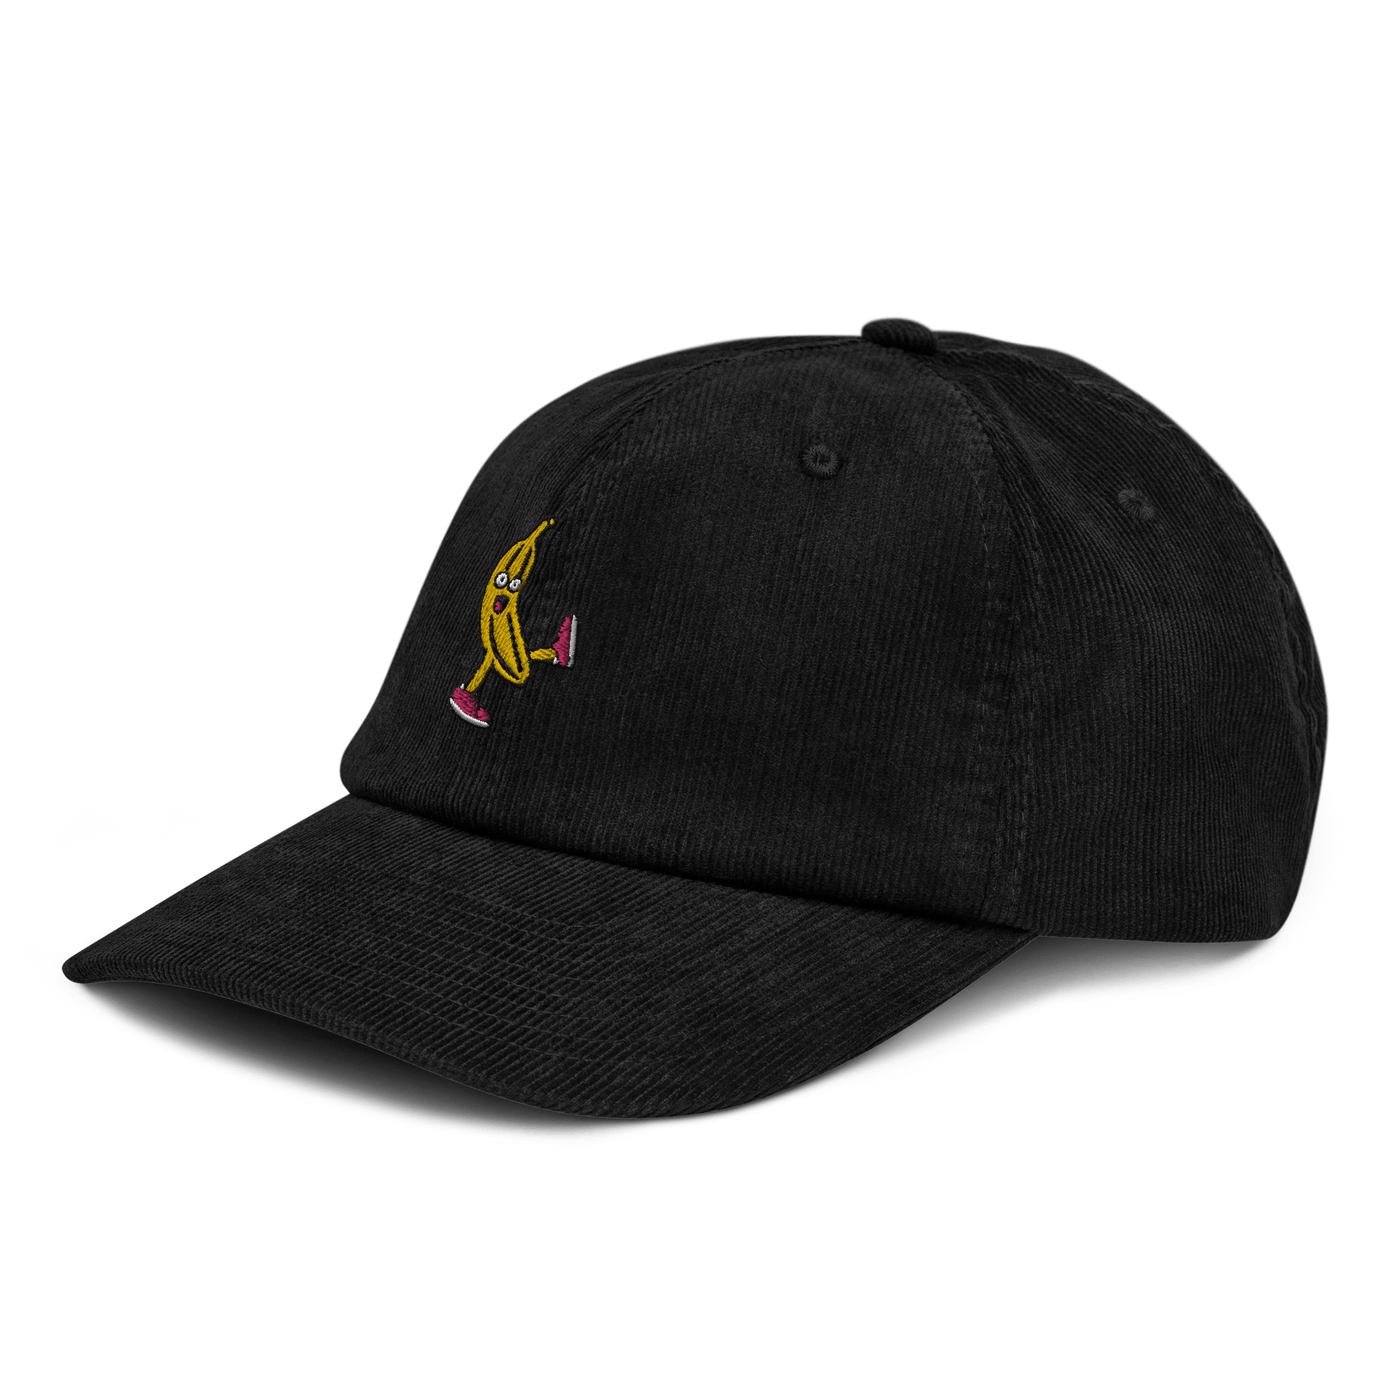 Drunk Banana Corduroy hat - Black - - Just Another Cap Store